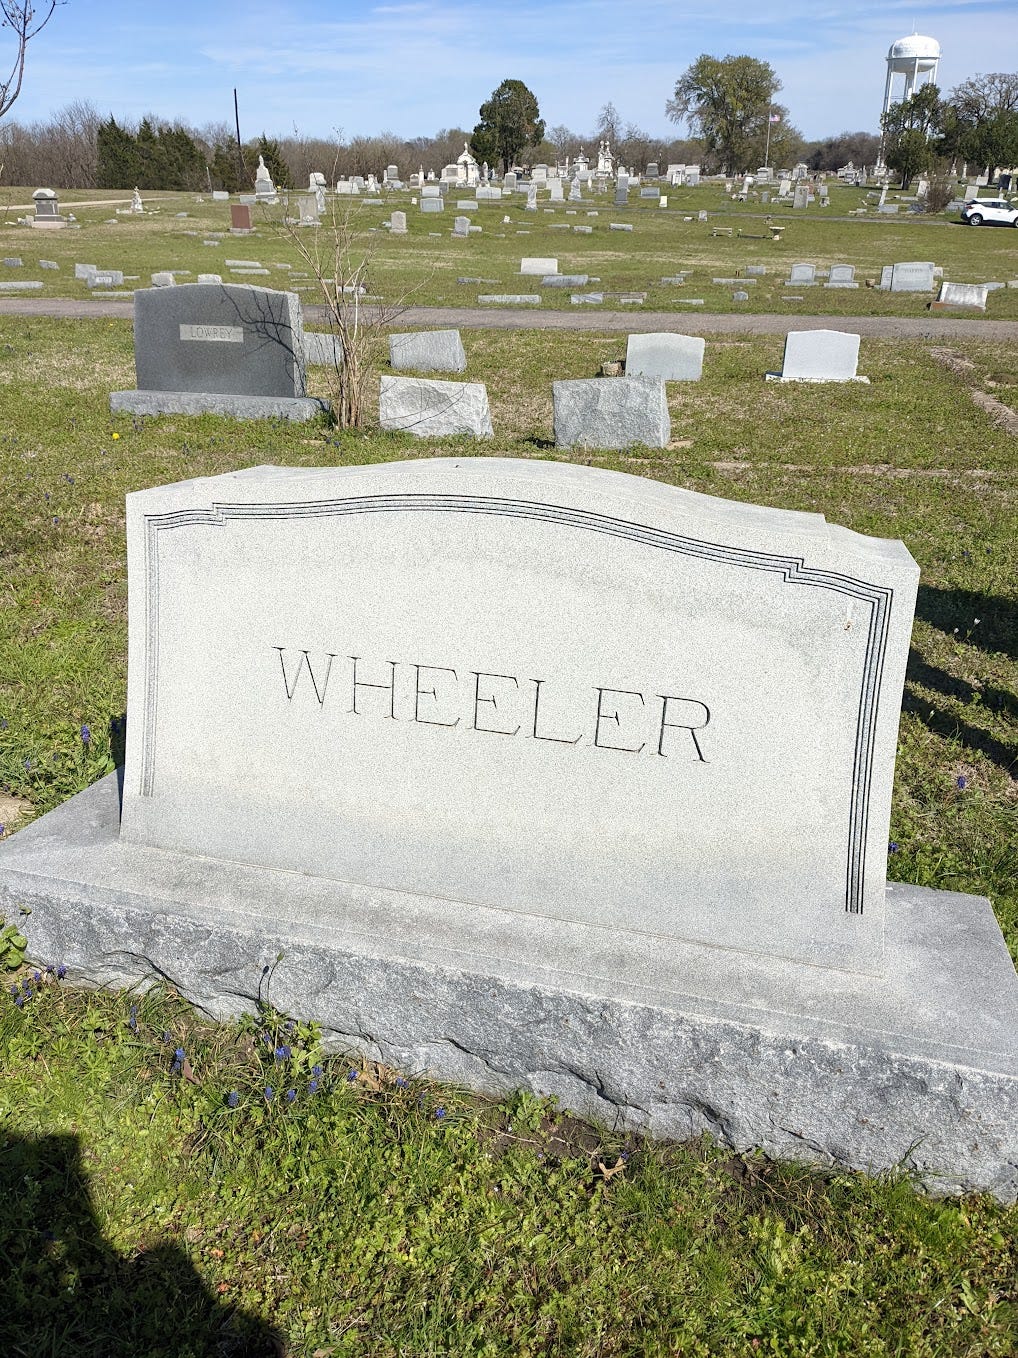 description: gravestone with the word Wheeler written on it